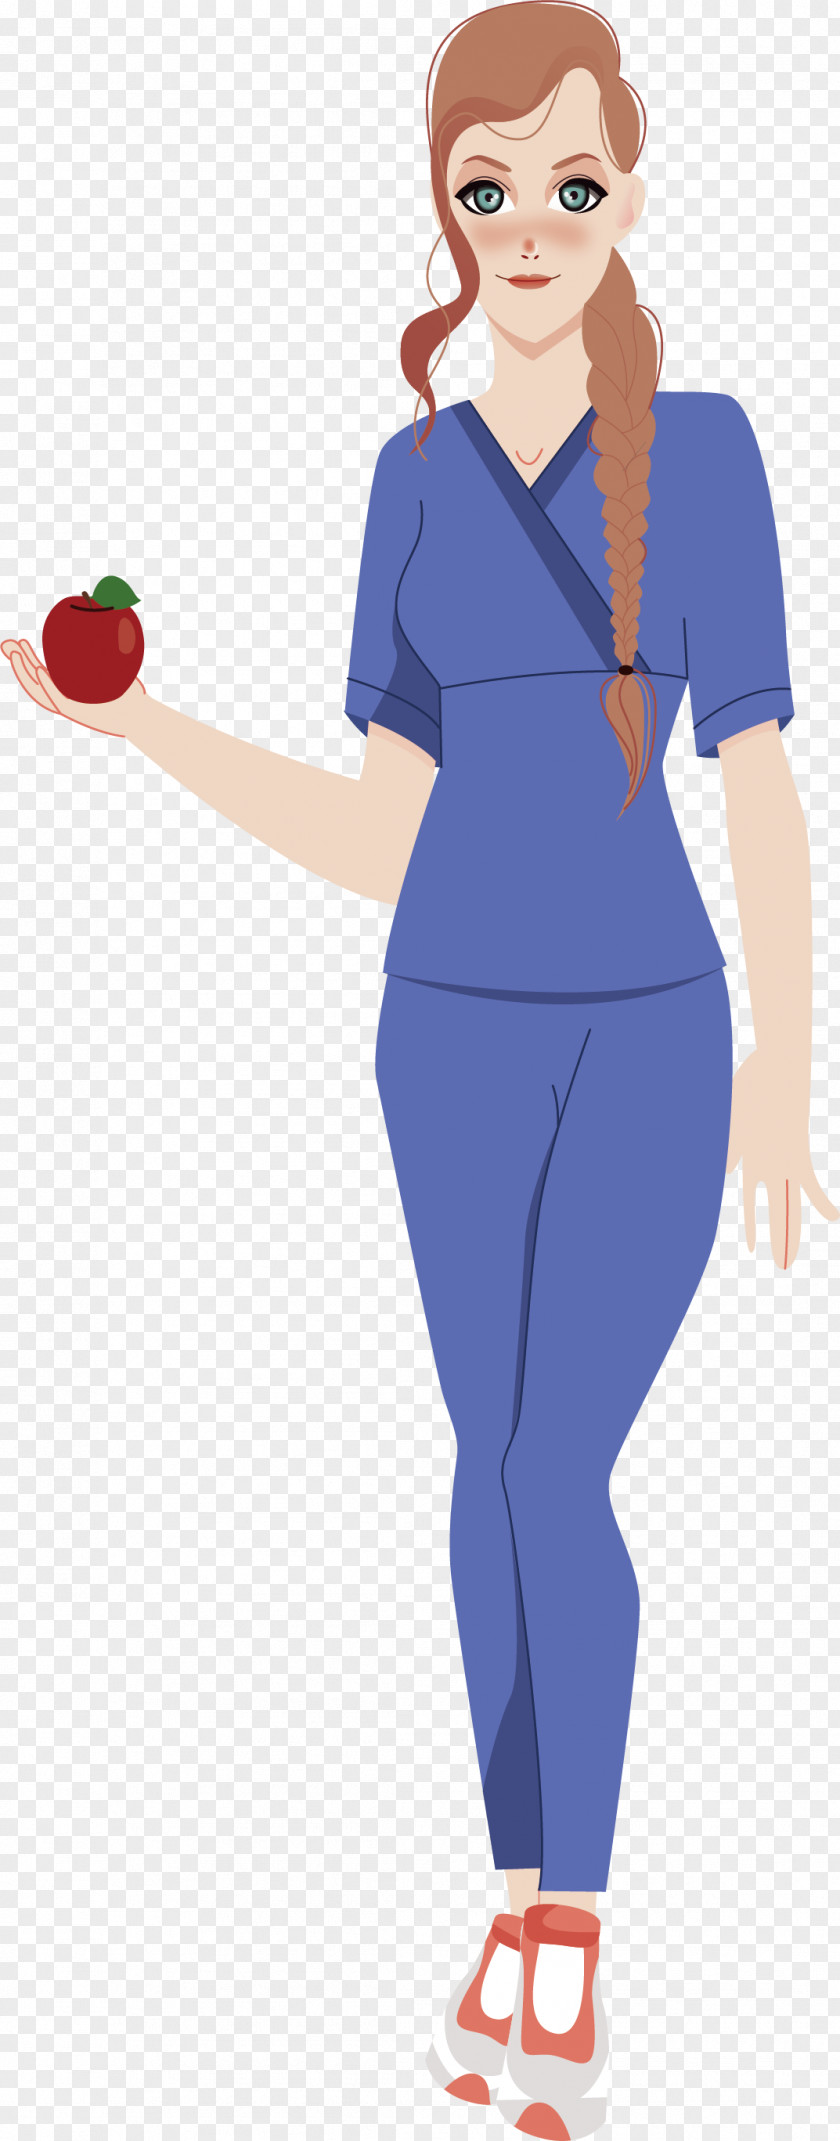 Holding An Apple Nurse PNG